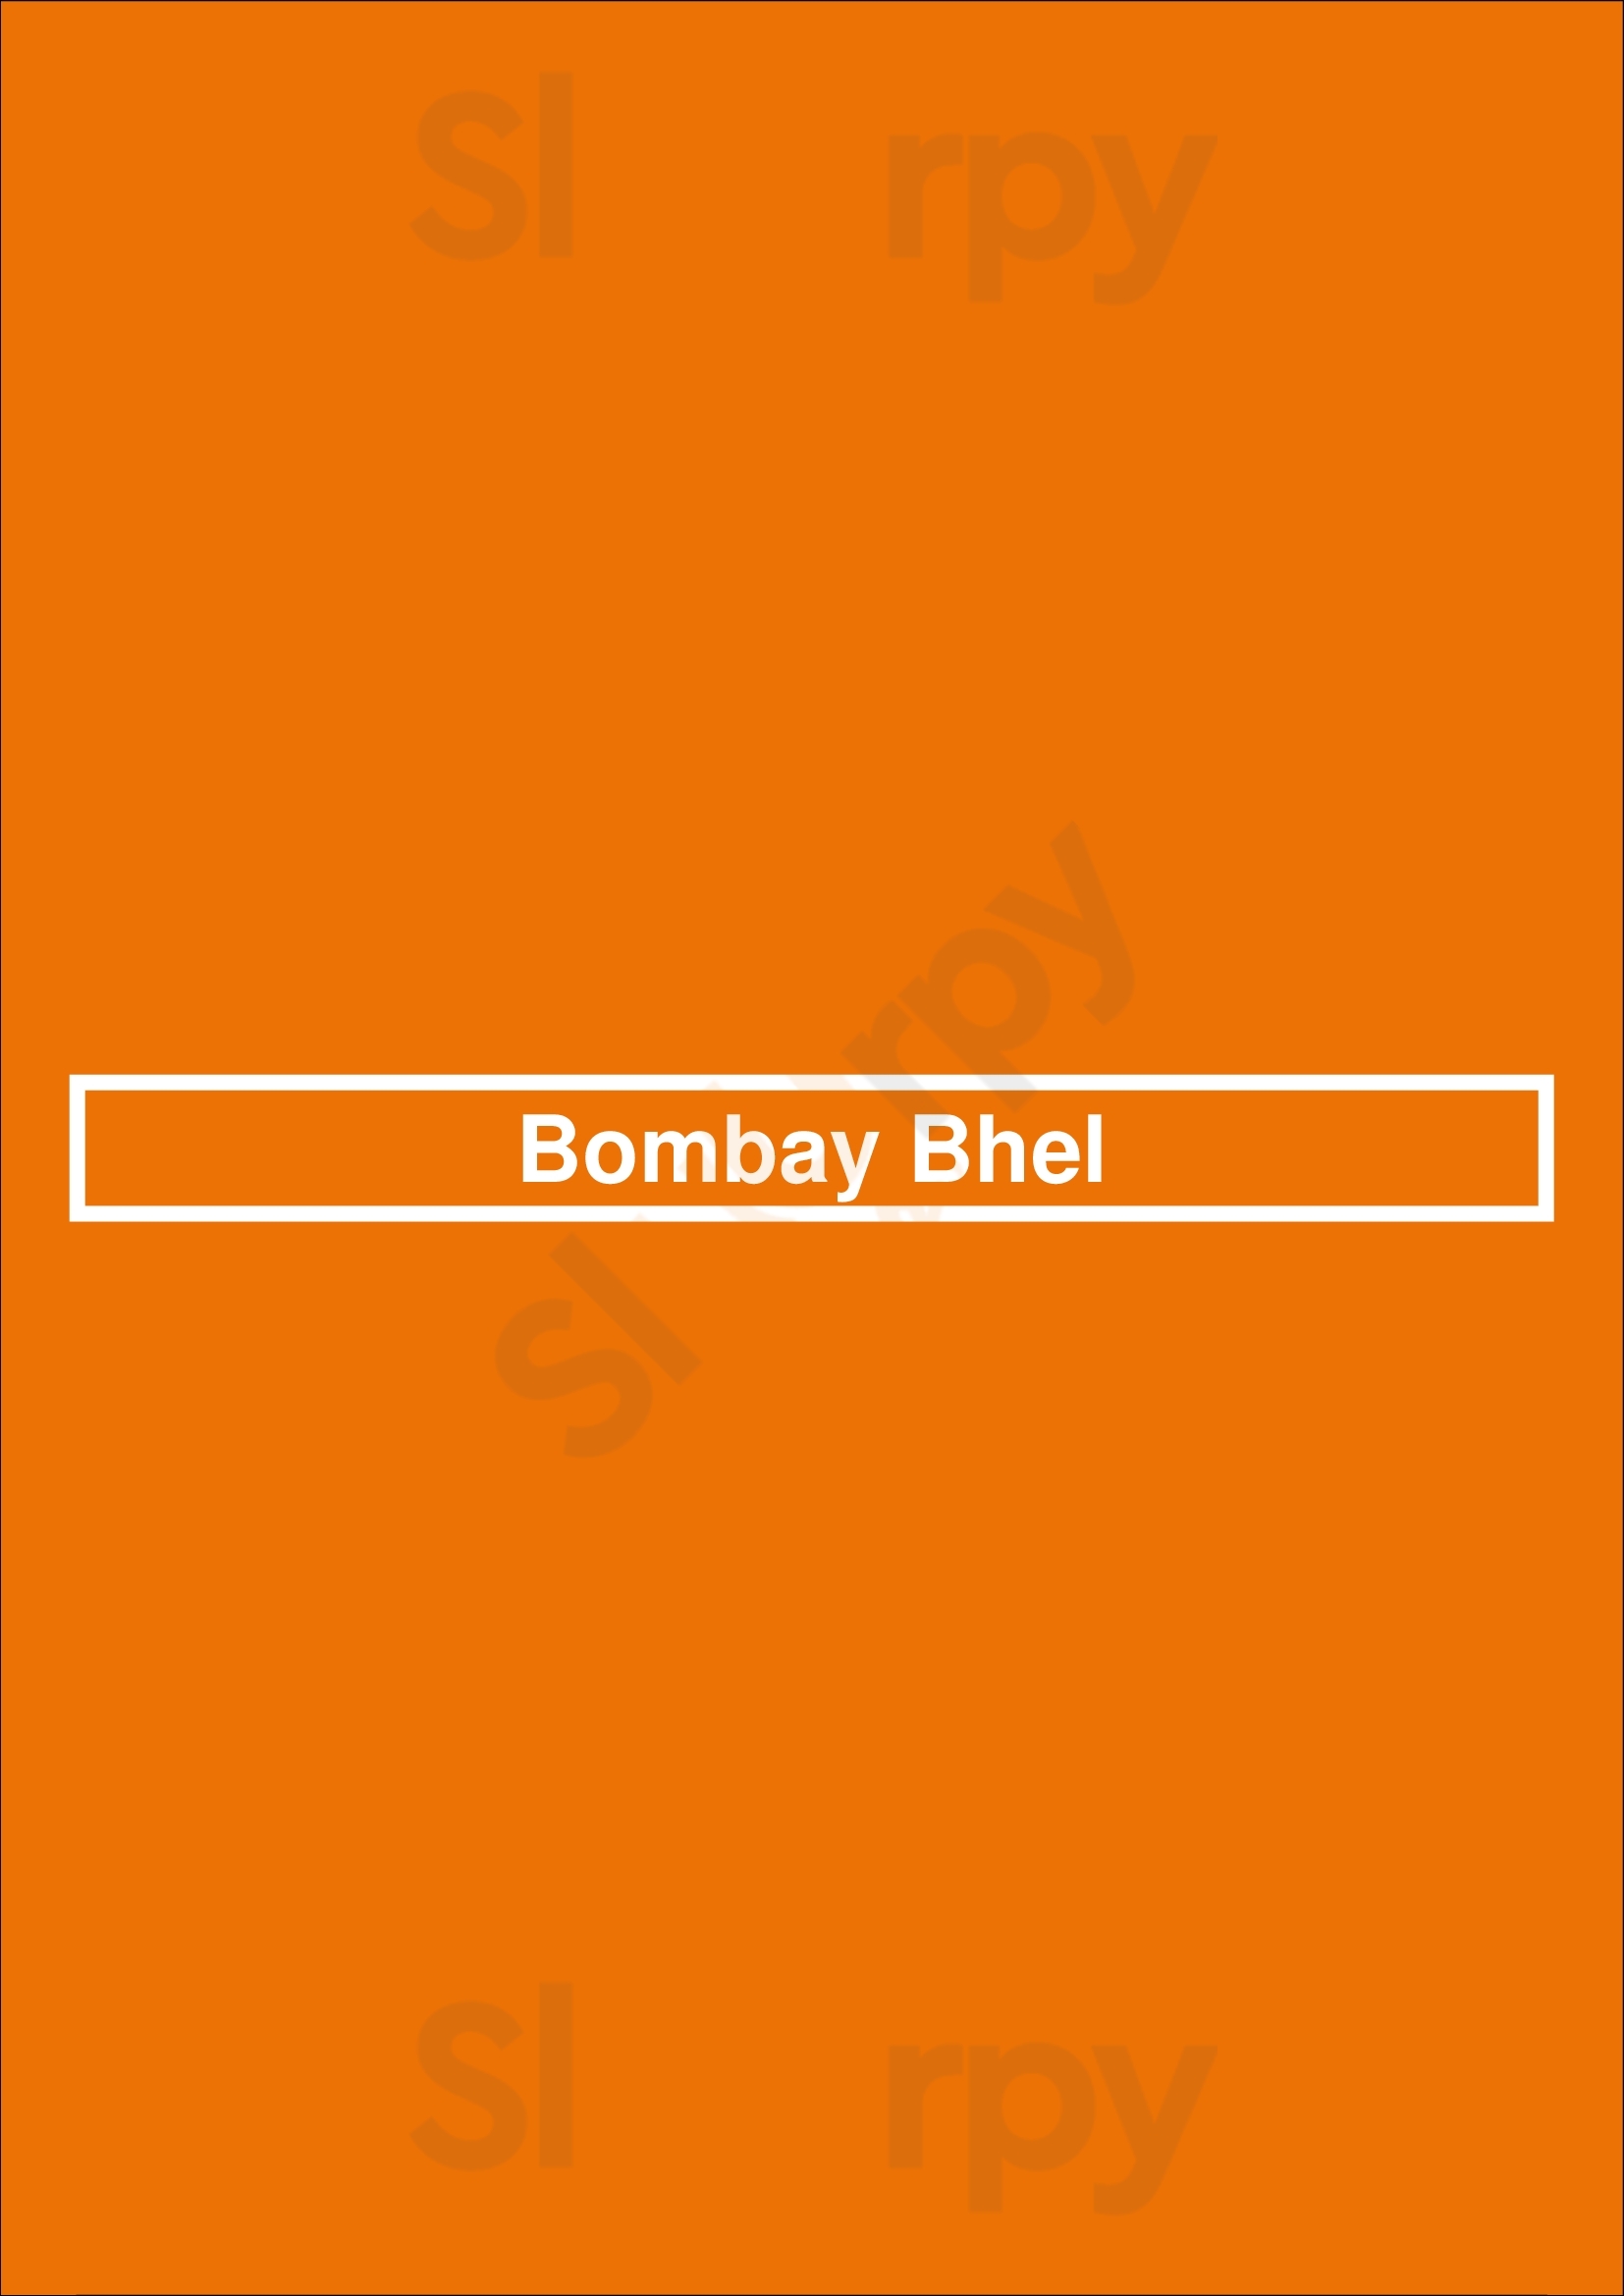 Bombay Bhel Mississauga Menu - 1